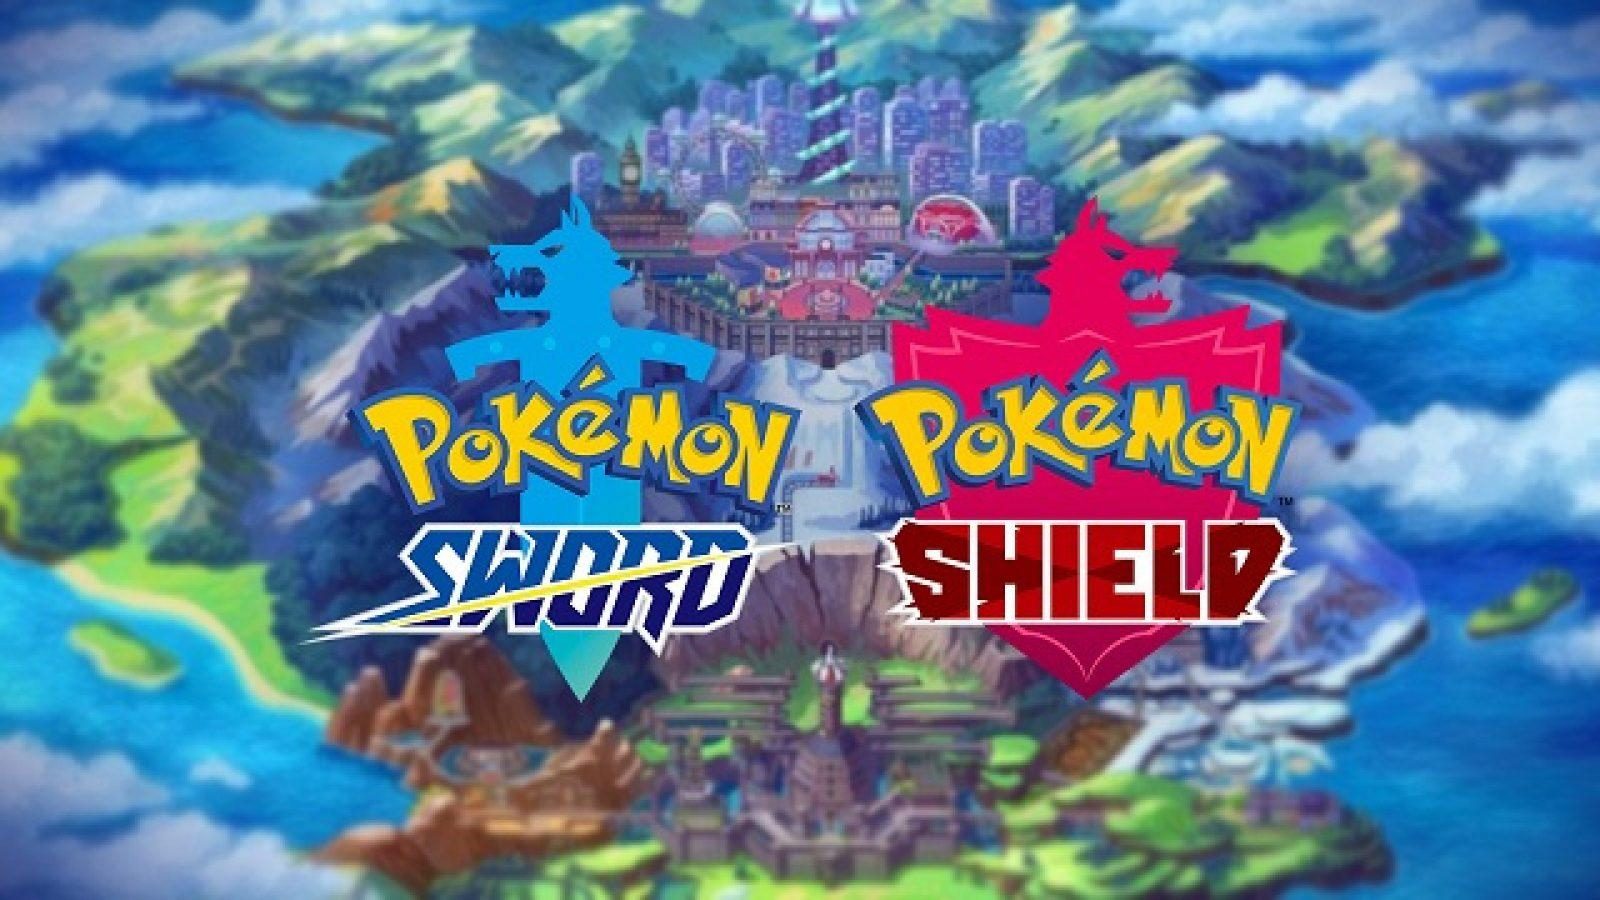 Novo trailer de Pokémon: Sword & Shield